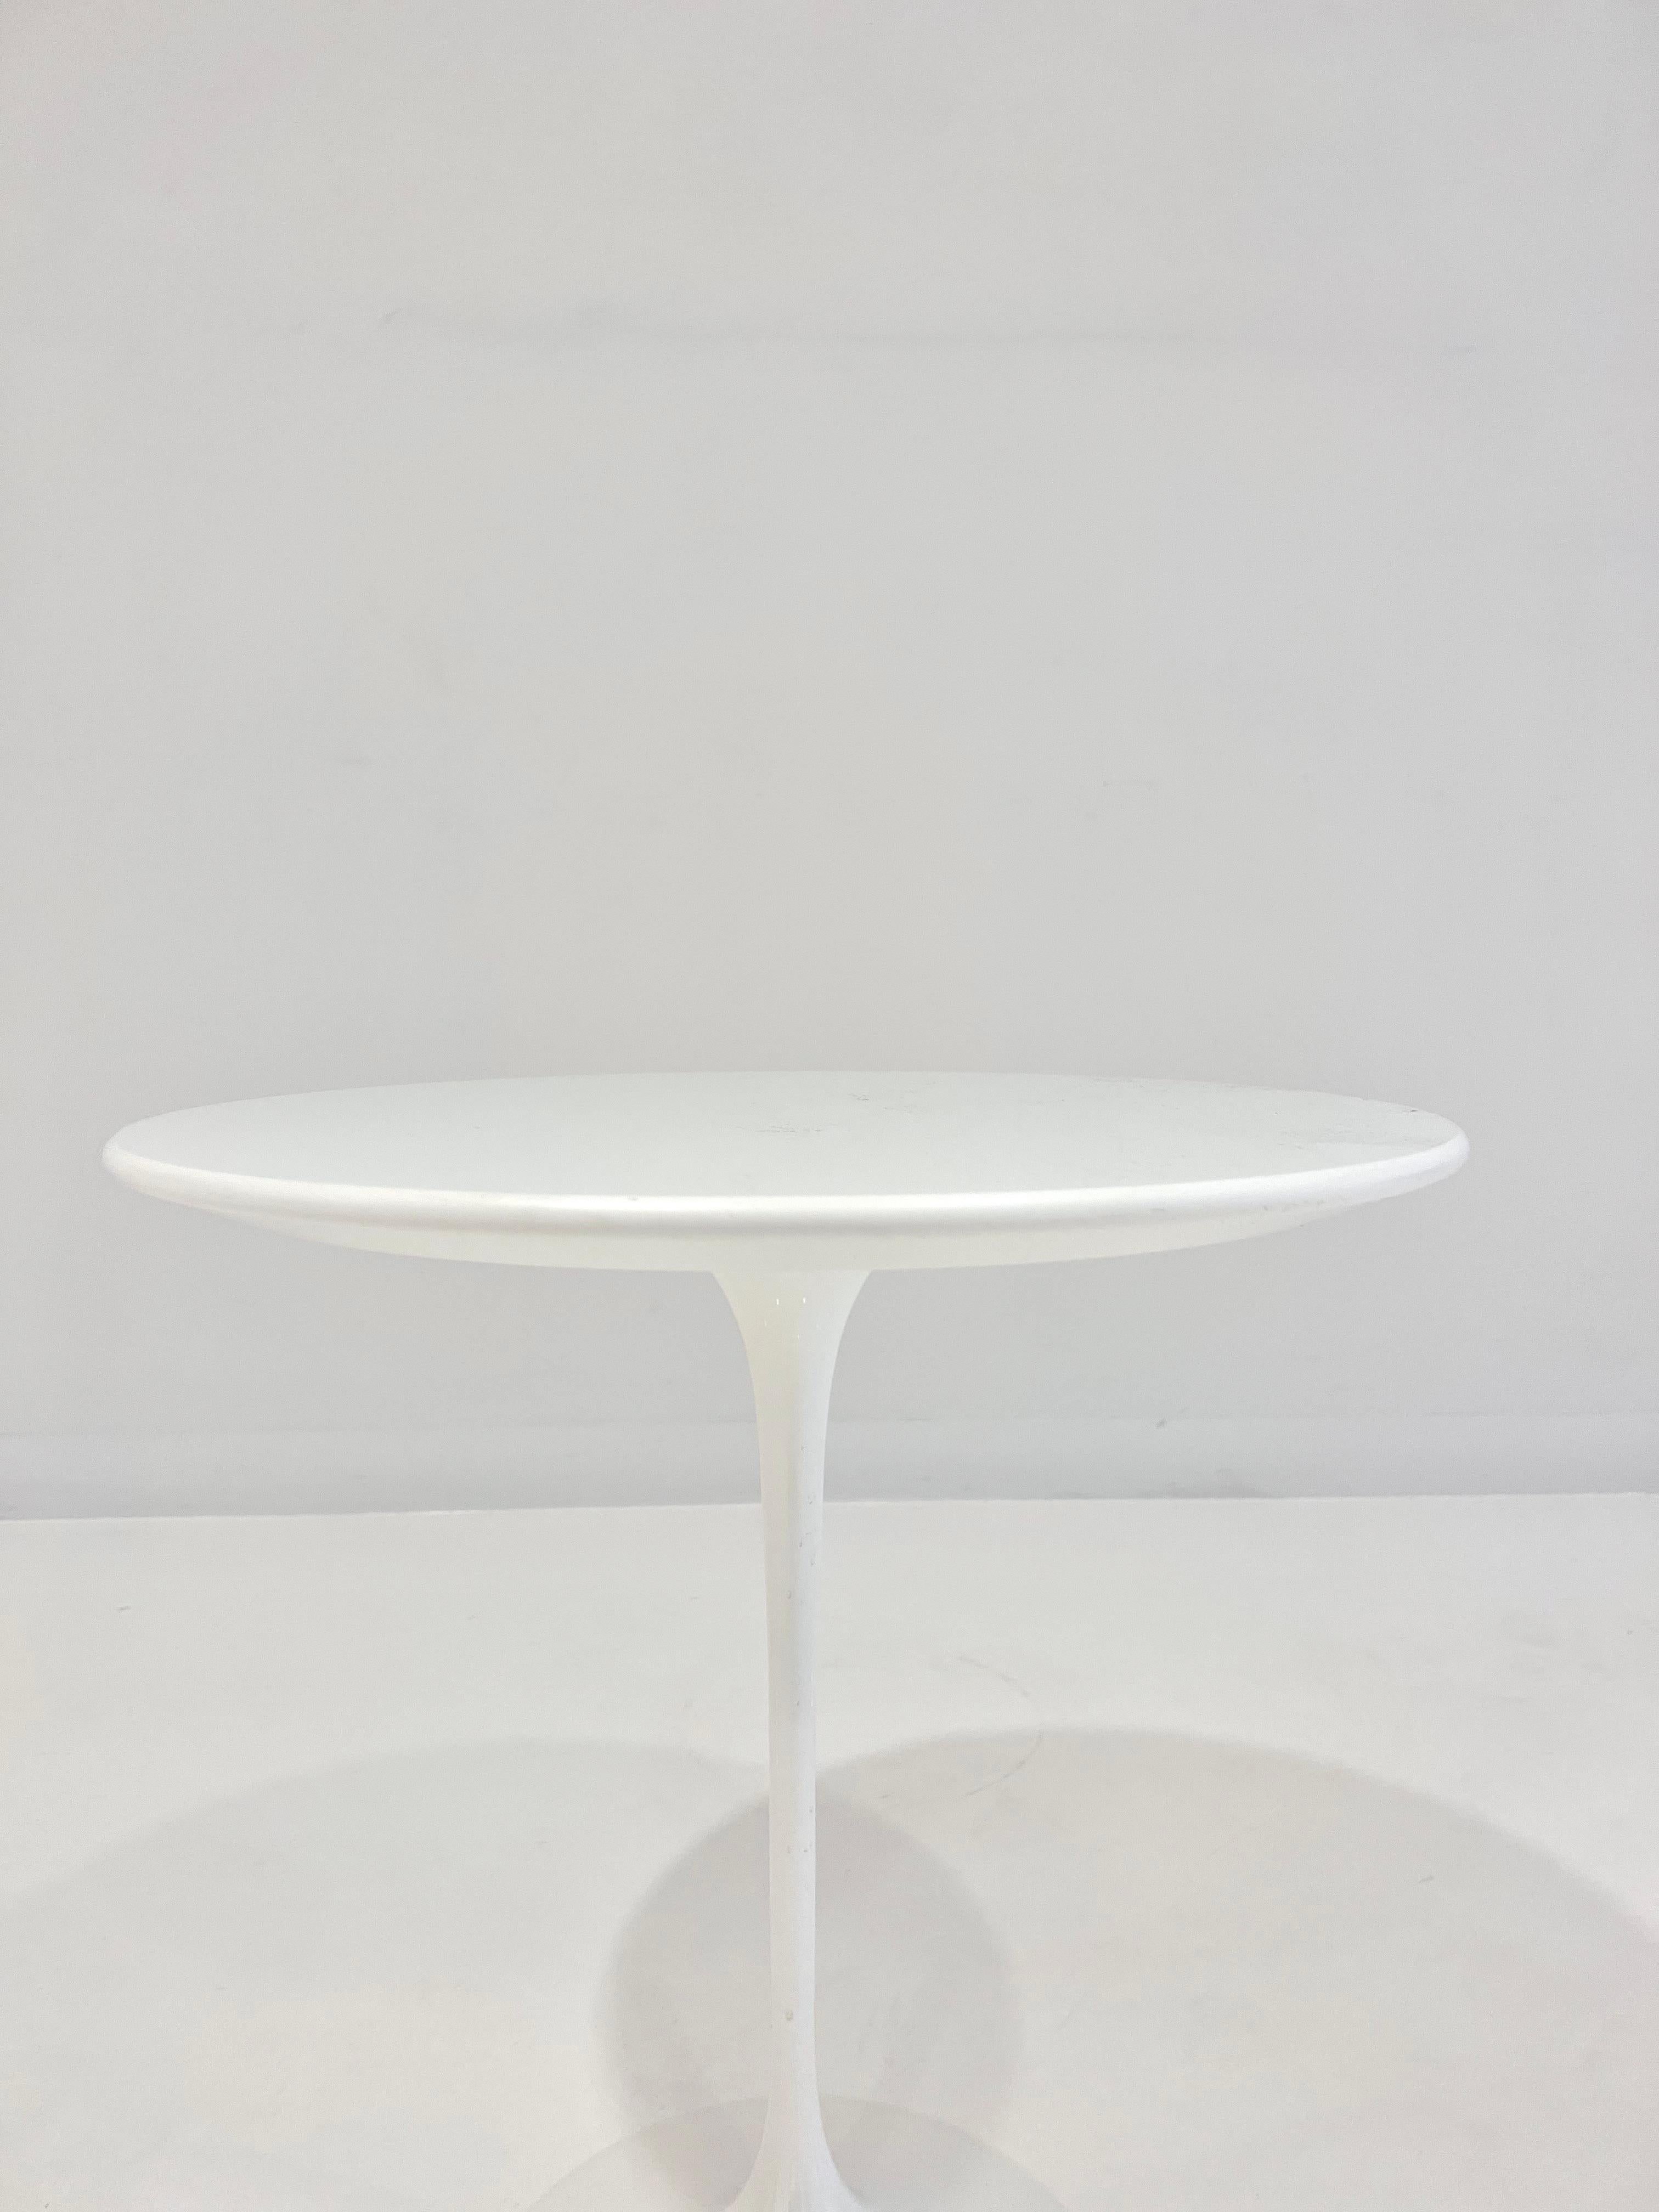 American Saarinen Tulip Side Table by Knoll Studio, 1956 For Sale